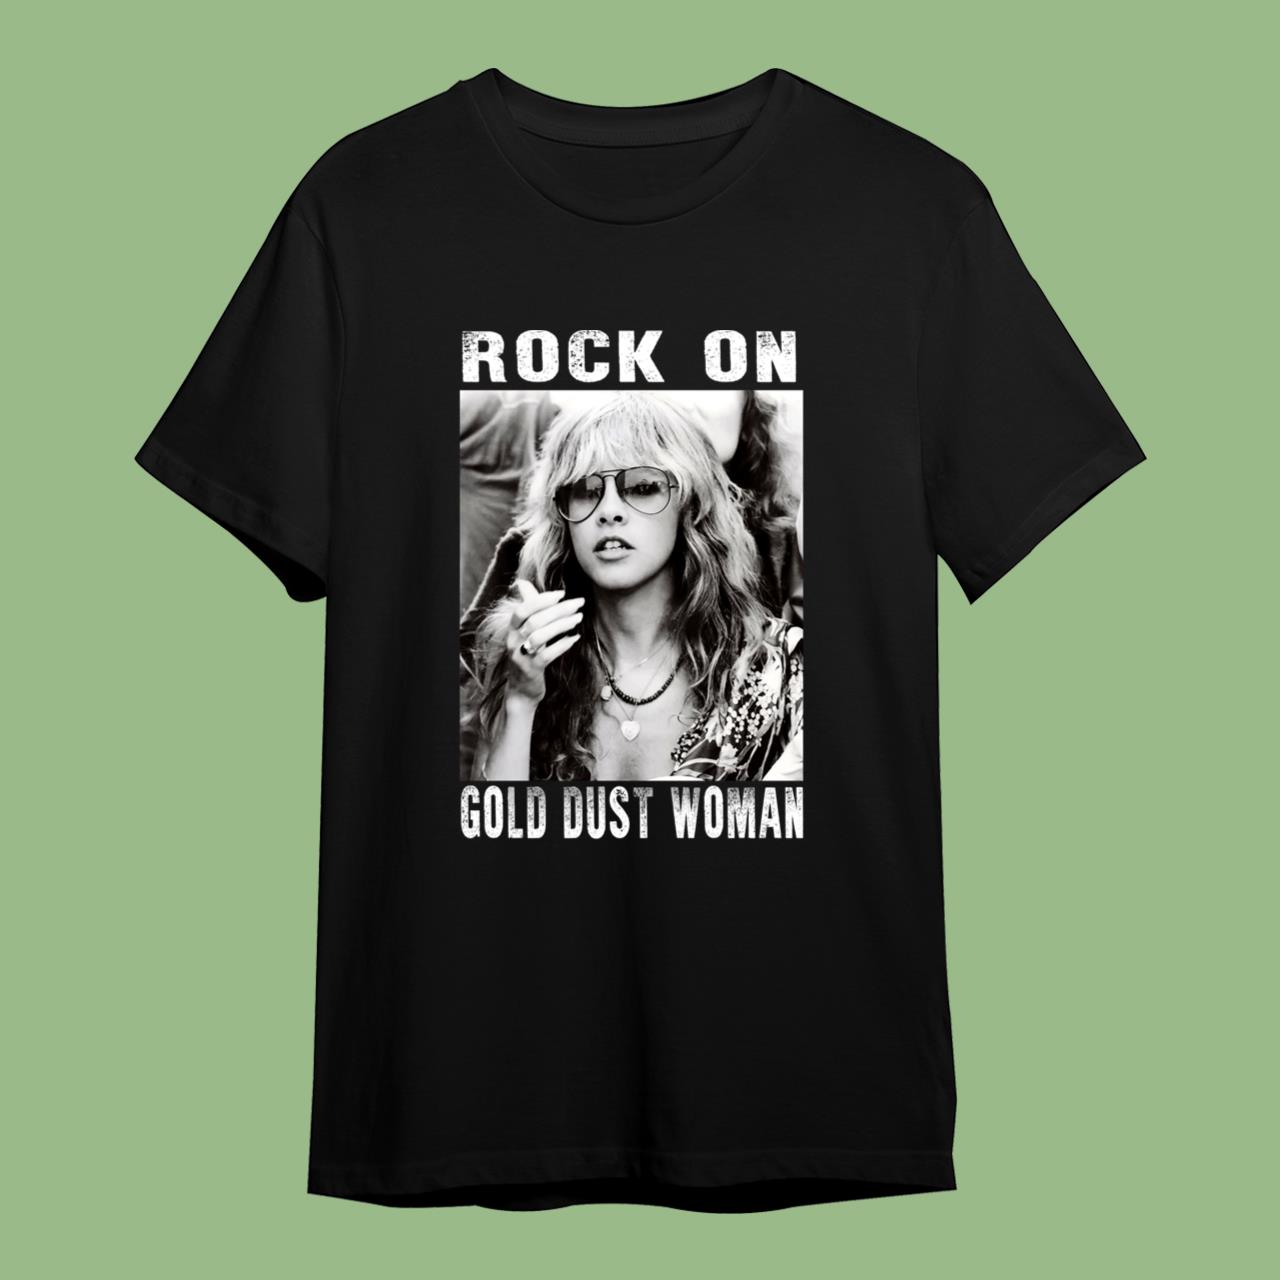 Rock On Gold Dust Woman Stevie Nicks T-Shirts For Men Women Girls